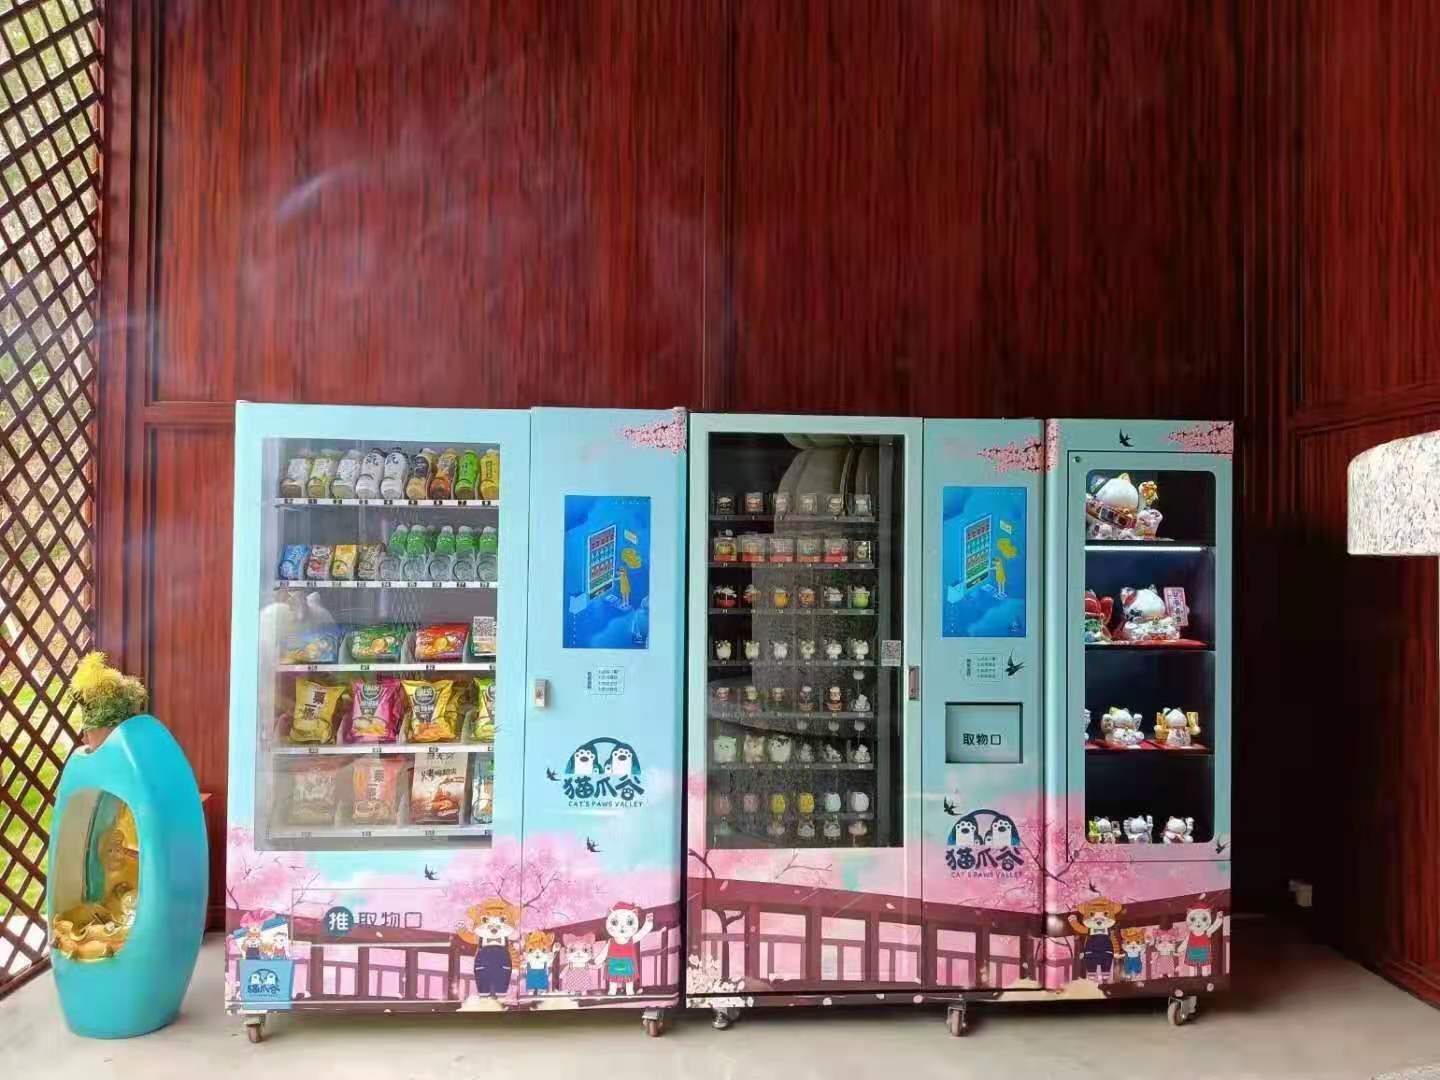 Micron smart Lucky box vending machine